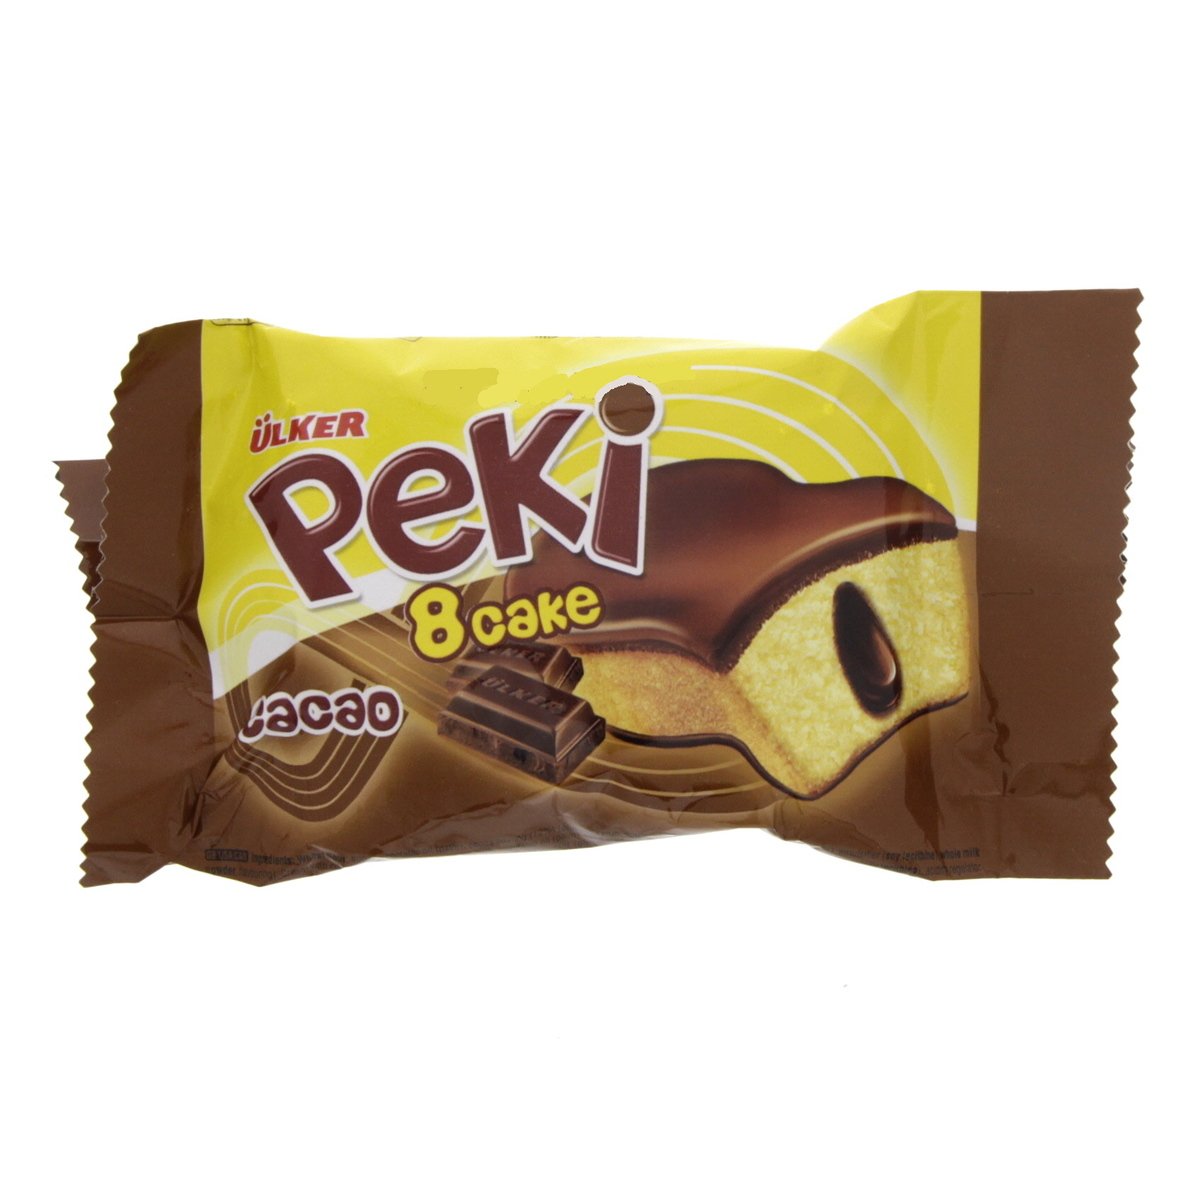 Ulker Peki Cacao 8 Cake 24 x 40 g